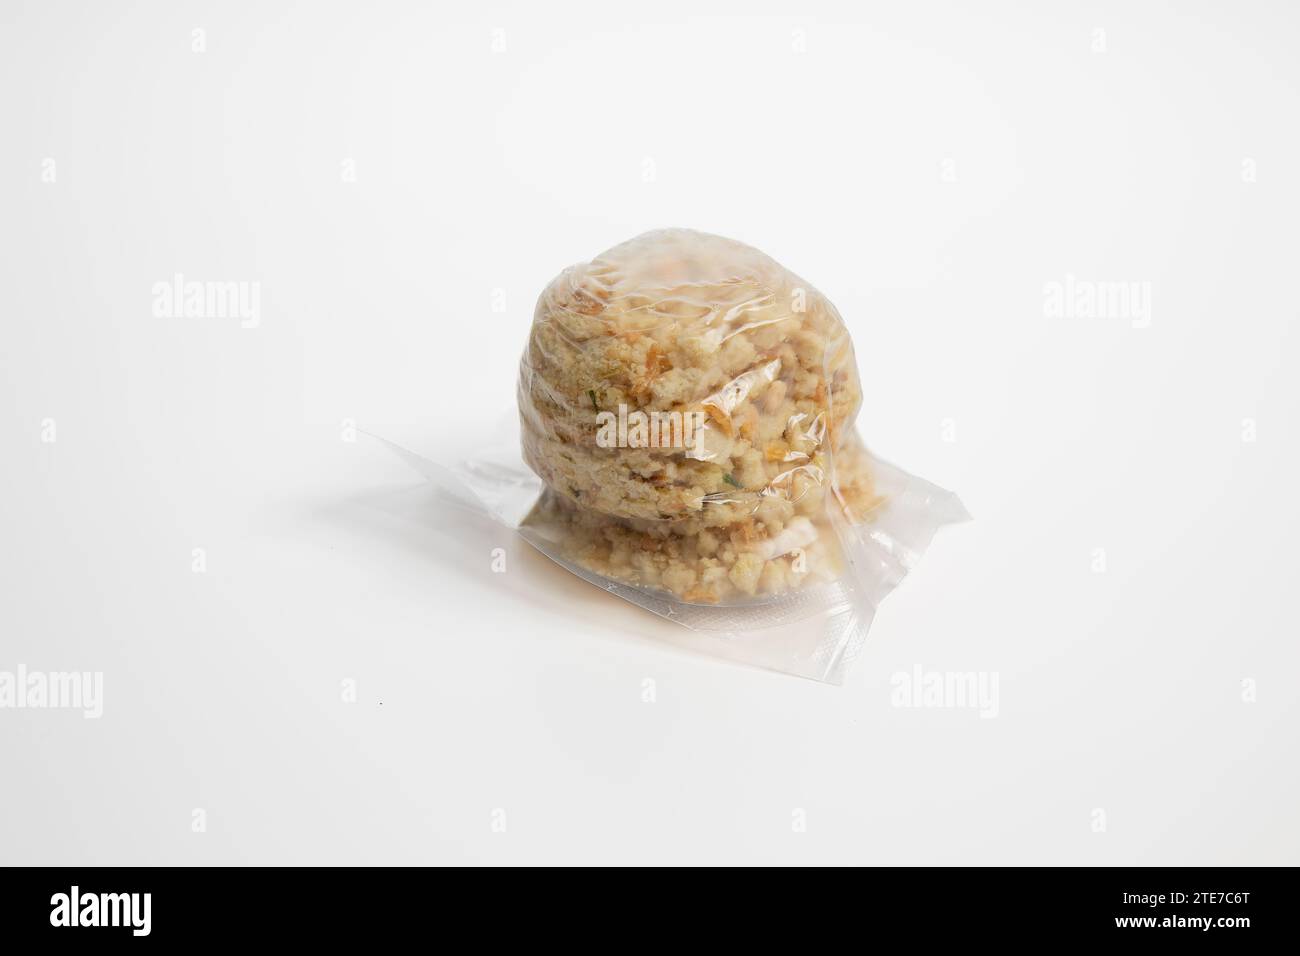 Commercial Made Bread Dumpling in plastic bag. European food Stock Photo